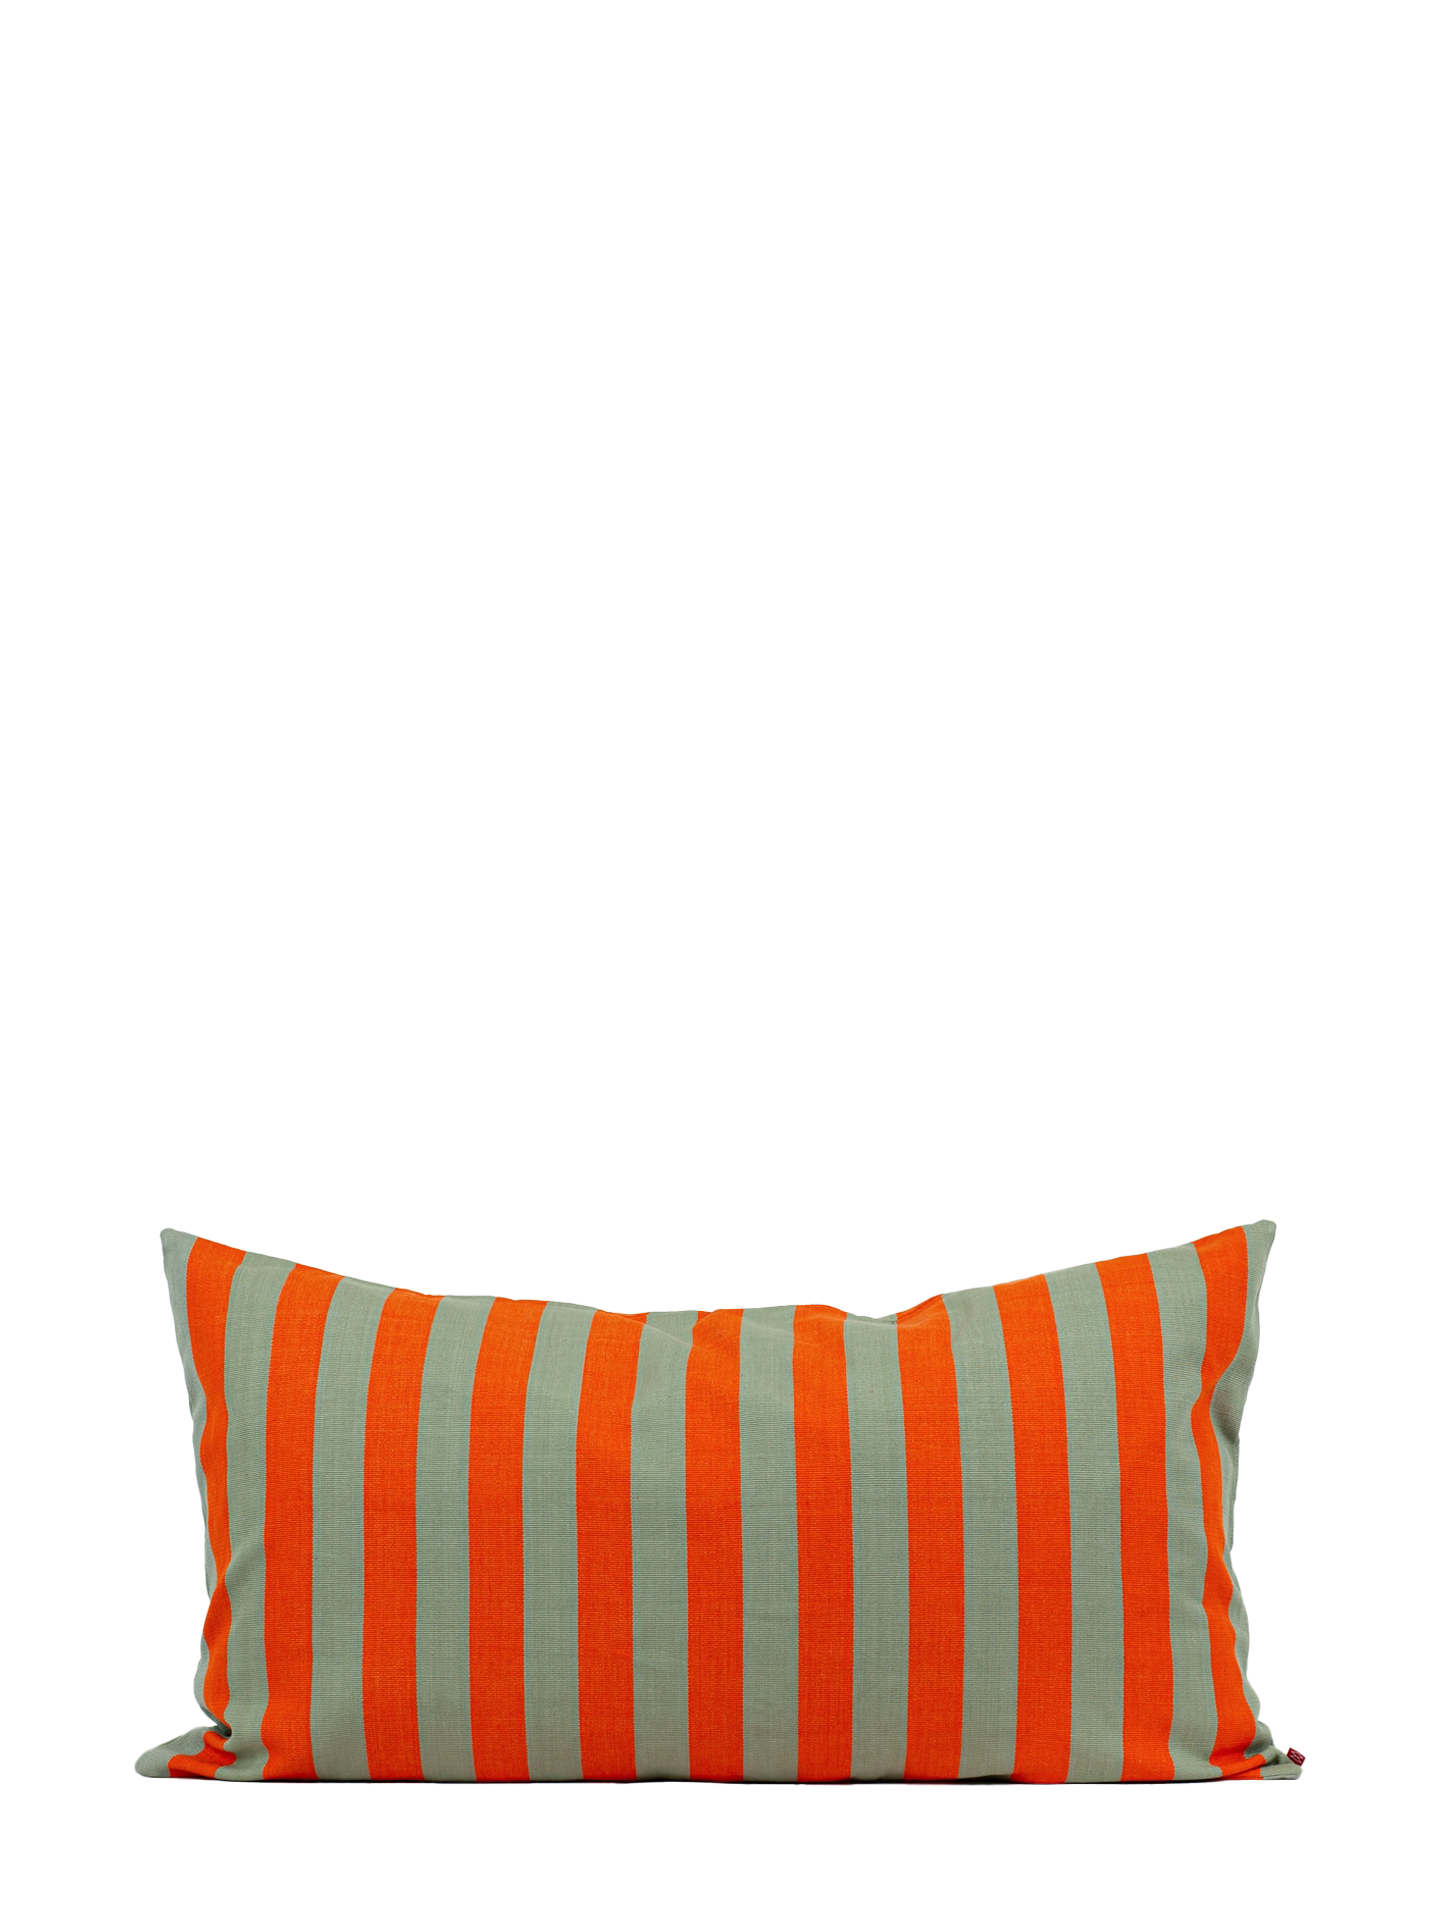 Emanuela Giant Cushion Cover (50x90cm), orange-beige